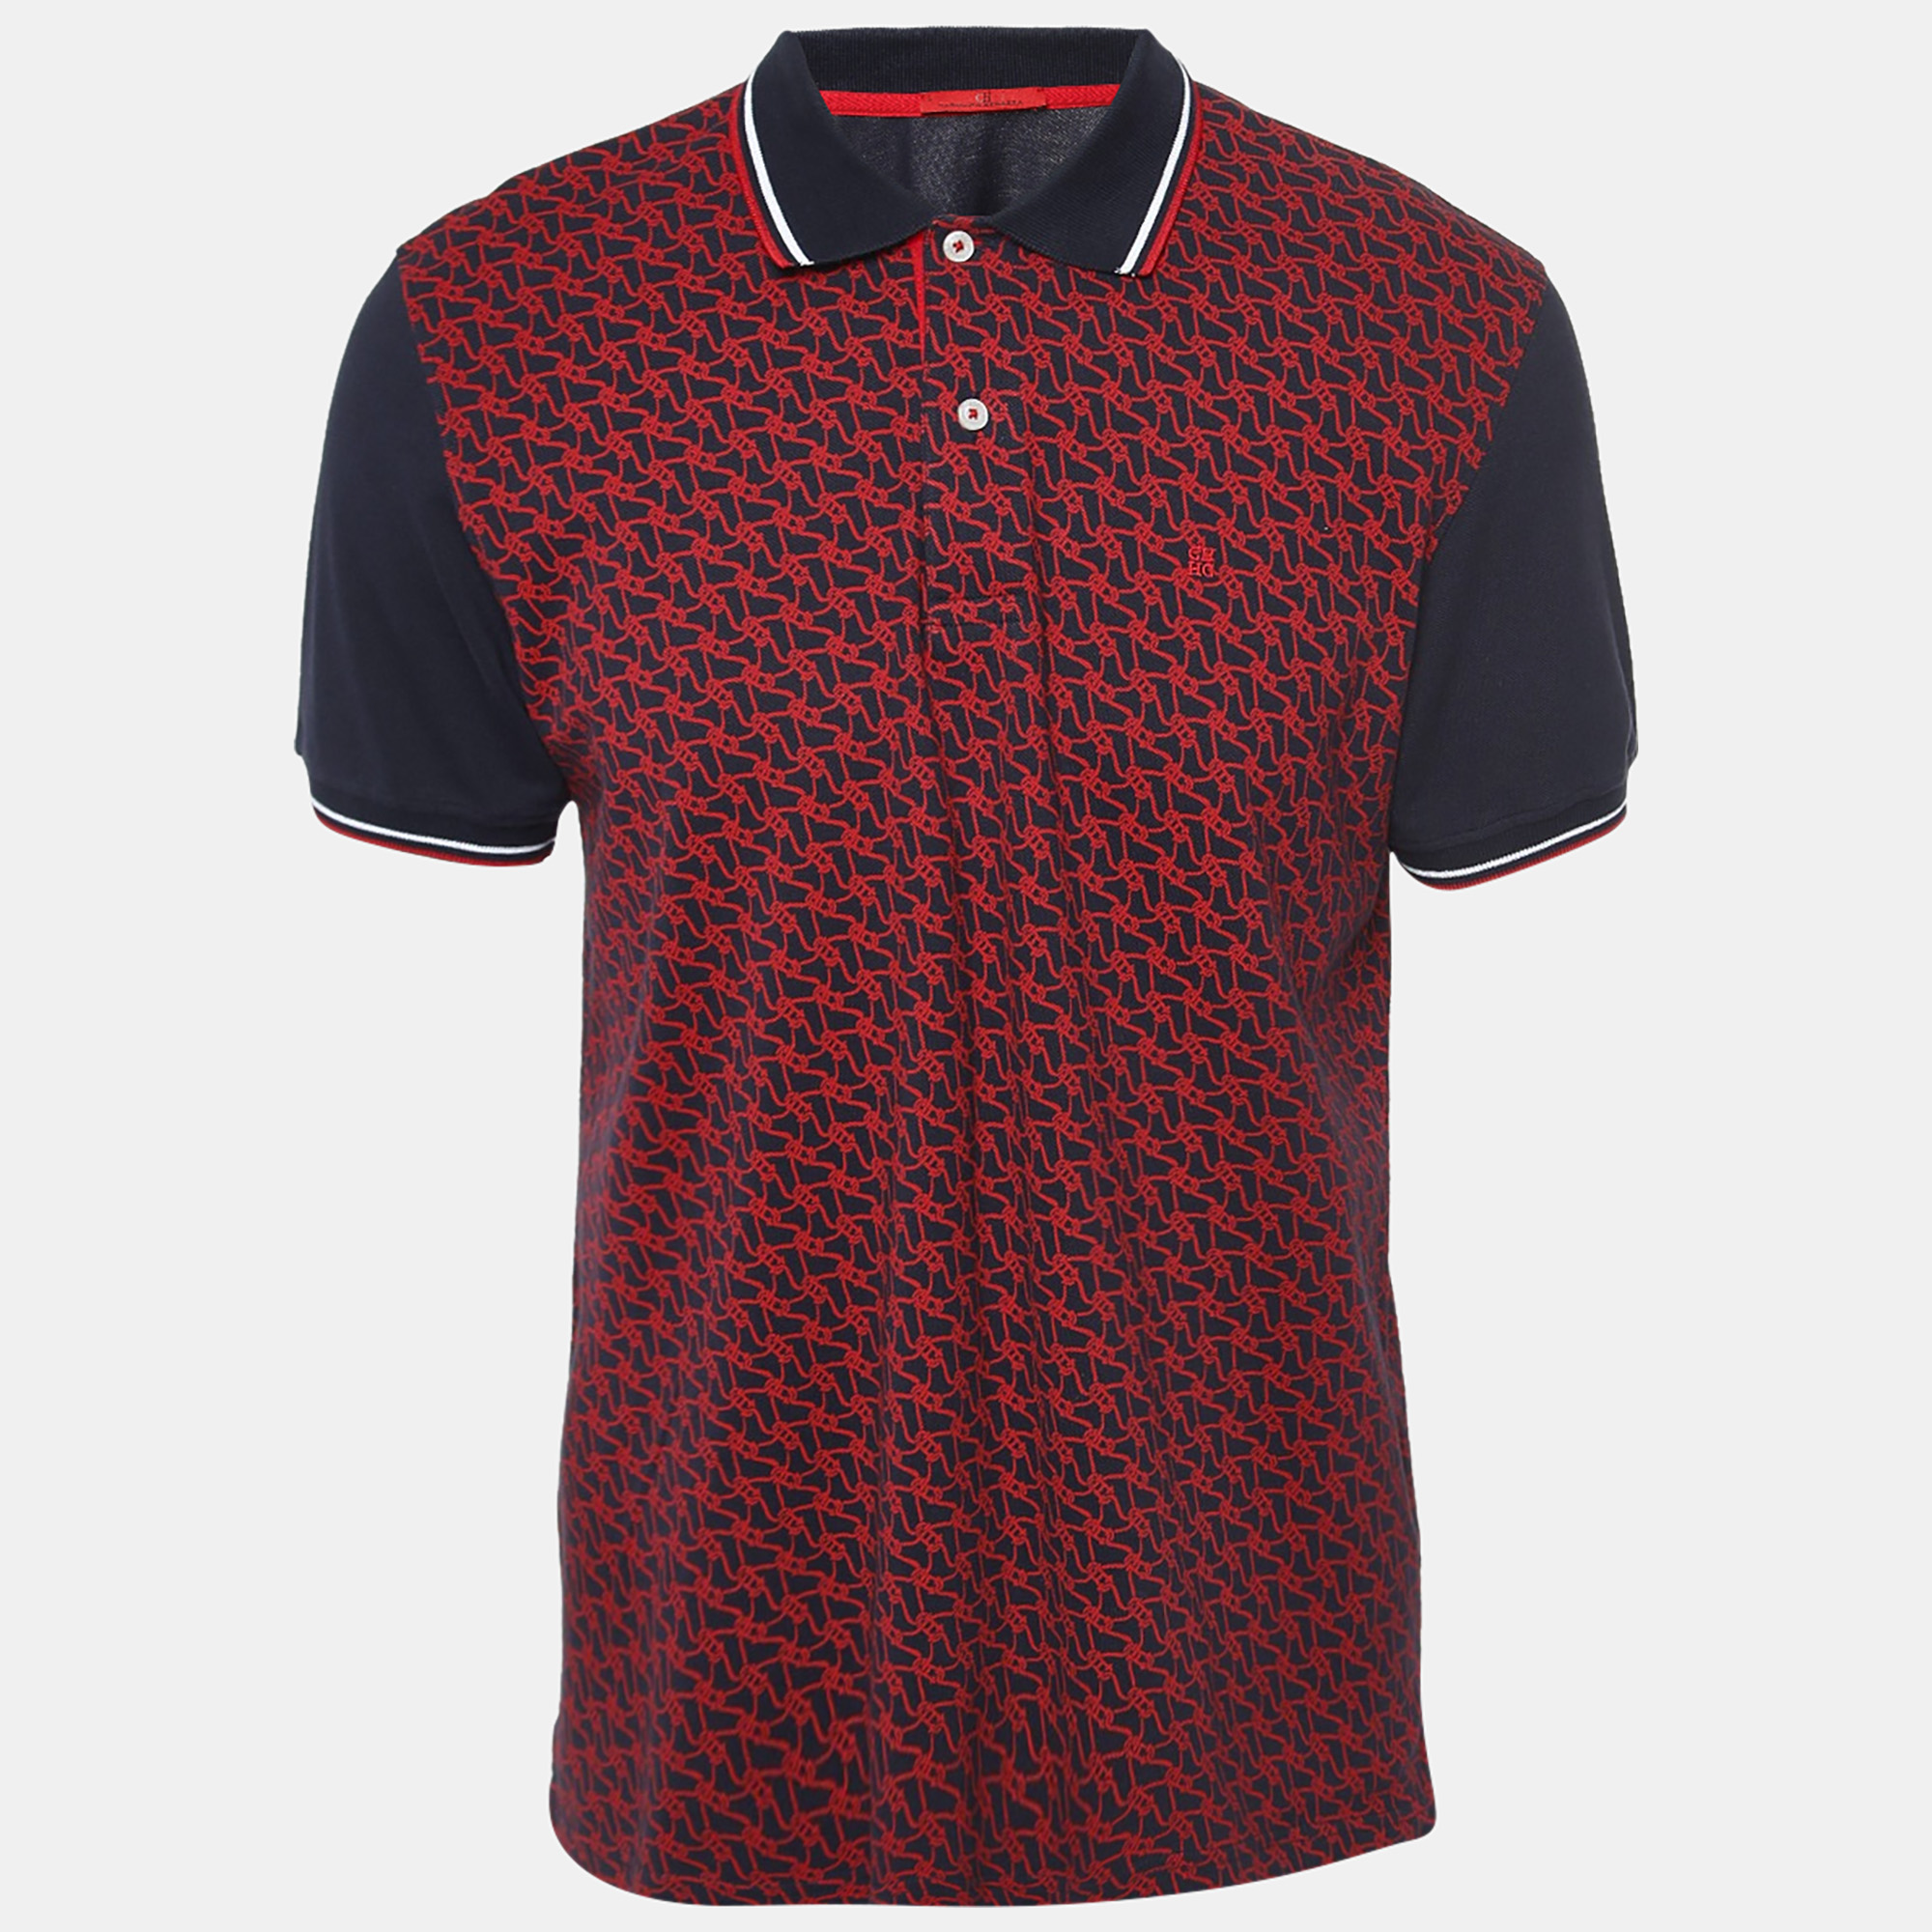 Ch carolina herrera navy blue/red printed cotton pique polo t-shirt l